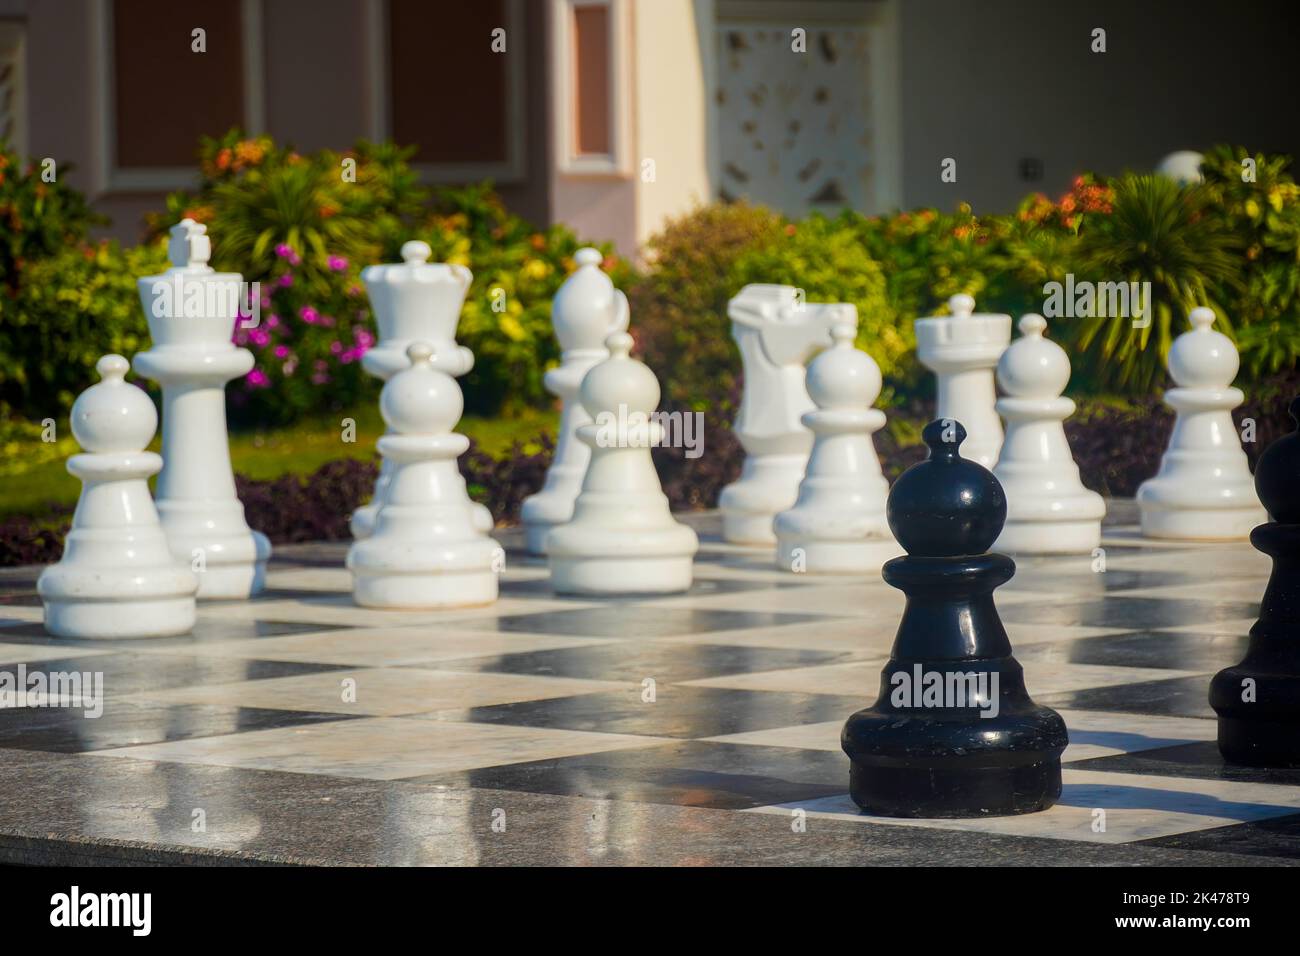 Chessmaster Garry Kasparov Is Determined to Checkmate Vladimir Putin